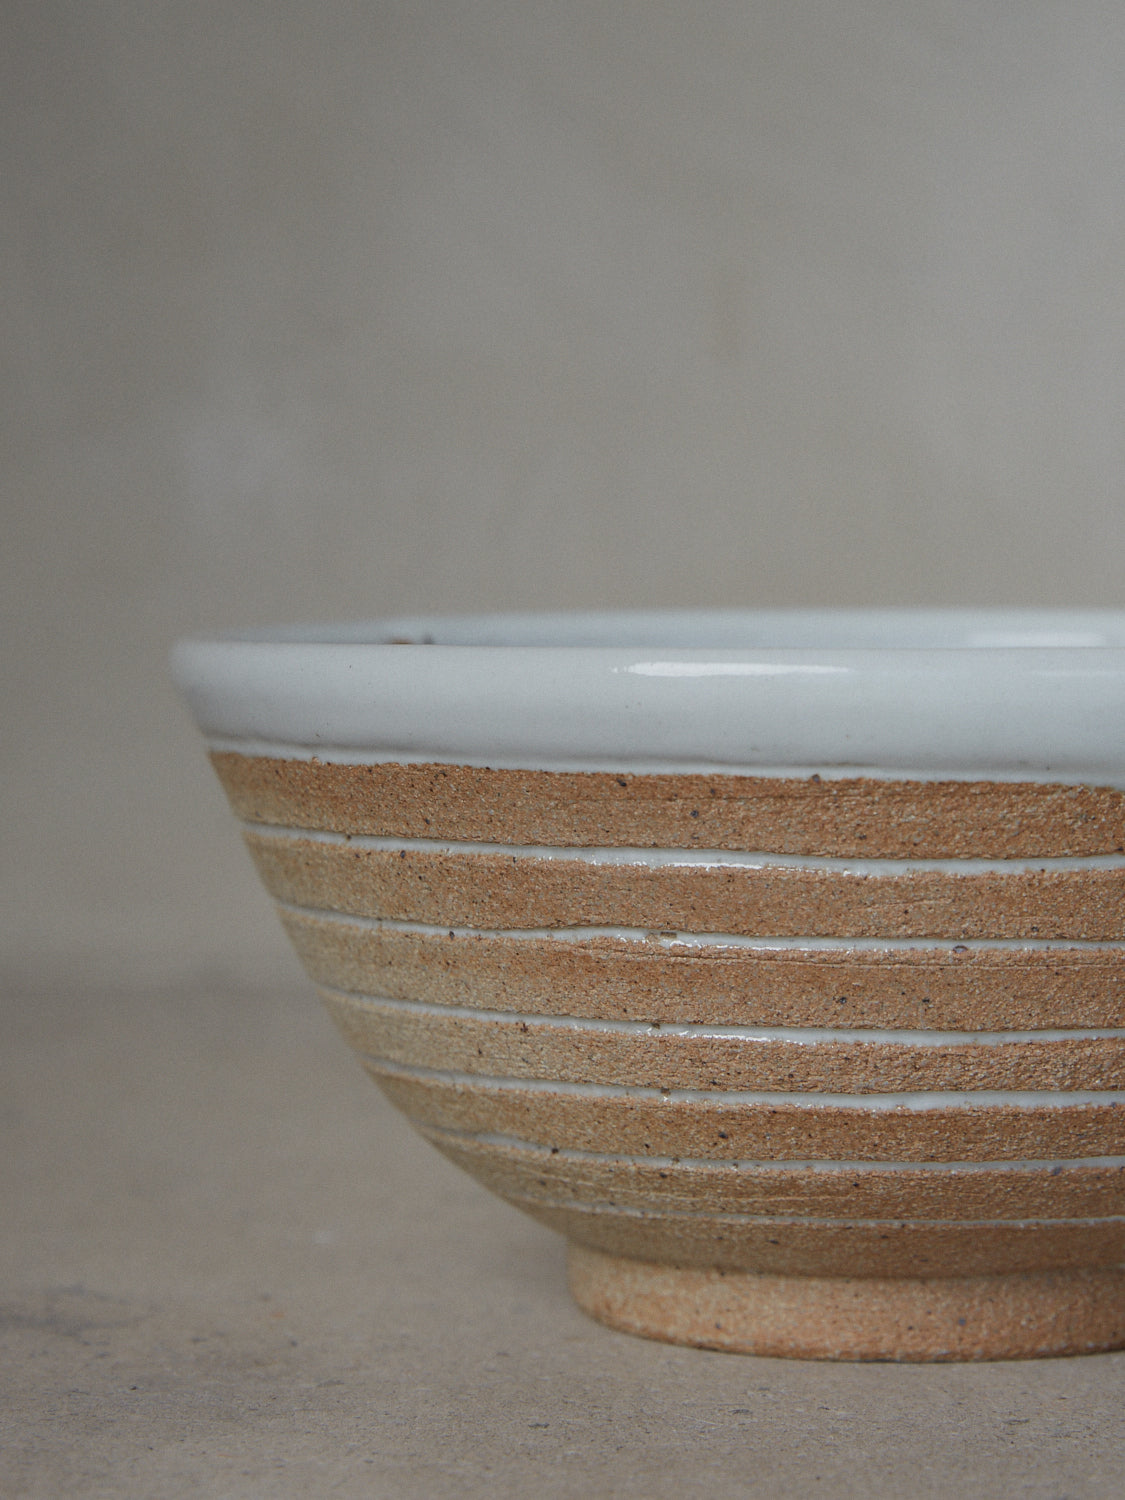 Stone Shinogi Bowl. Limited edition. One-of-a-kind, hand-thrown, footed stoneware bowl with horizontal Japanese Shinogi style ridge pattern.